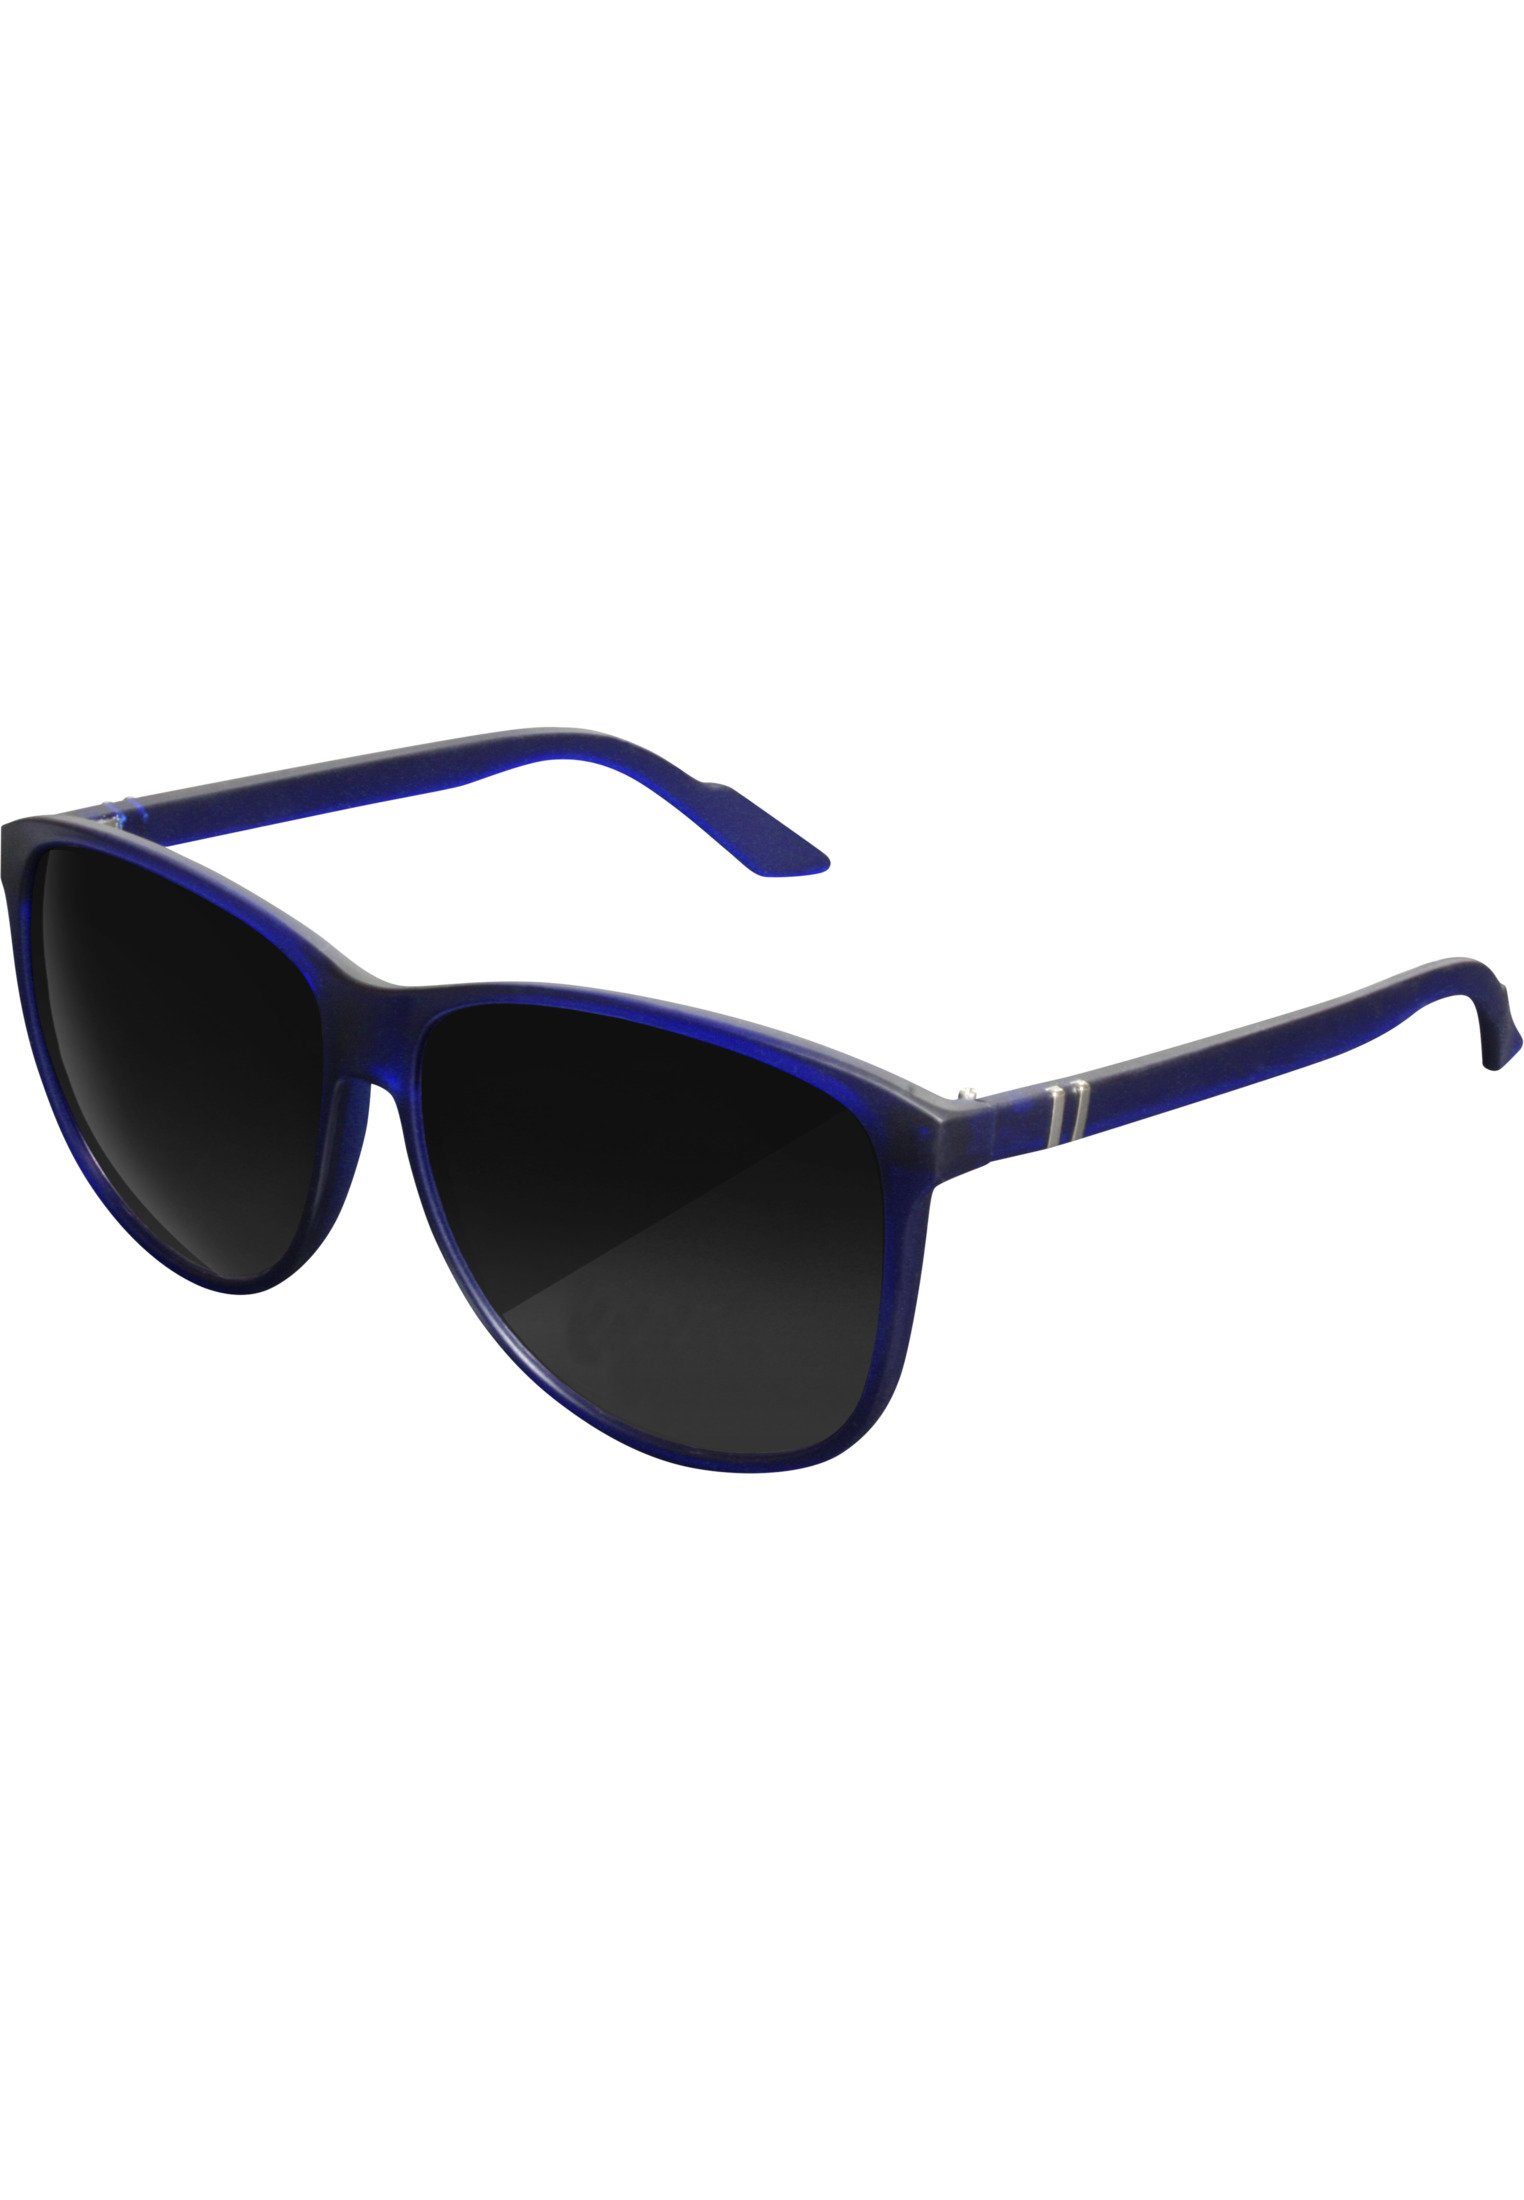 Sunglasses royal Sonnenbrille MSTRDS Chirwa Accessoires